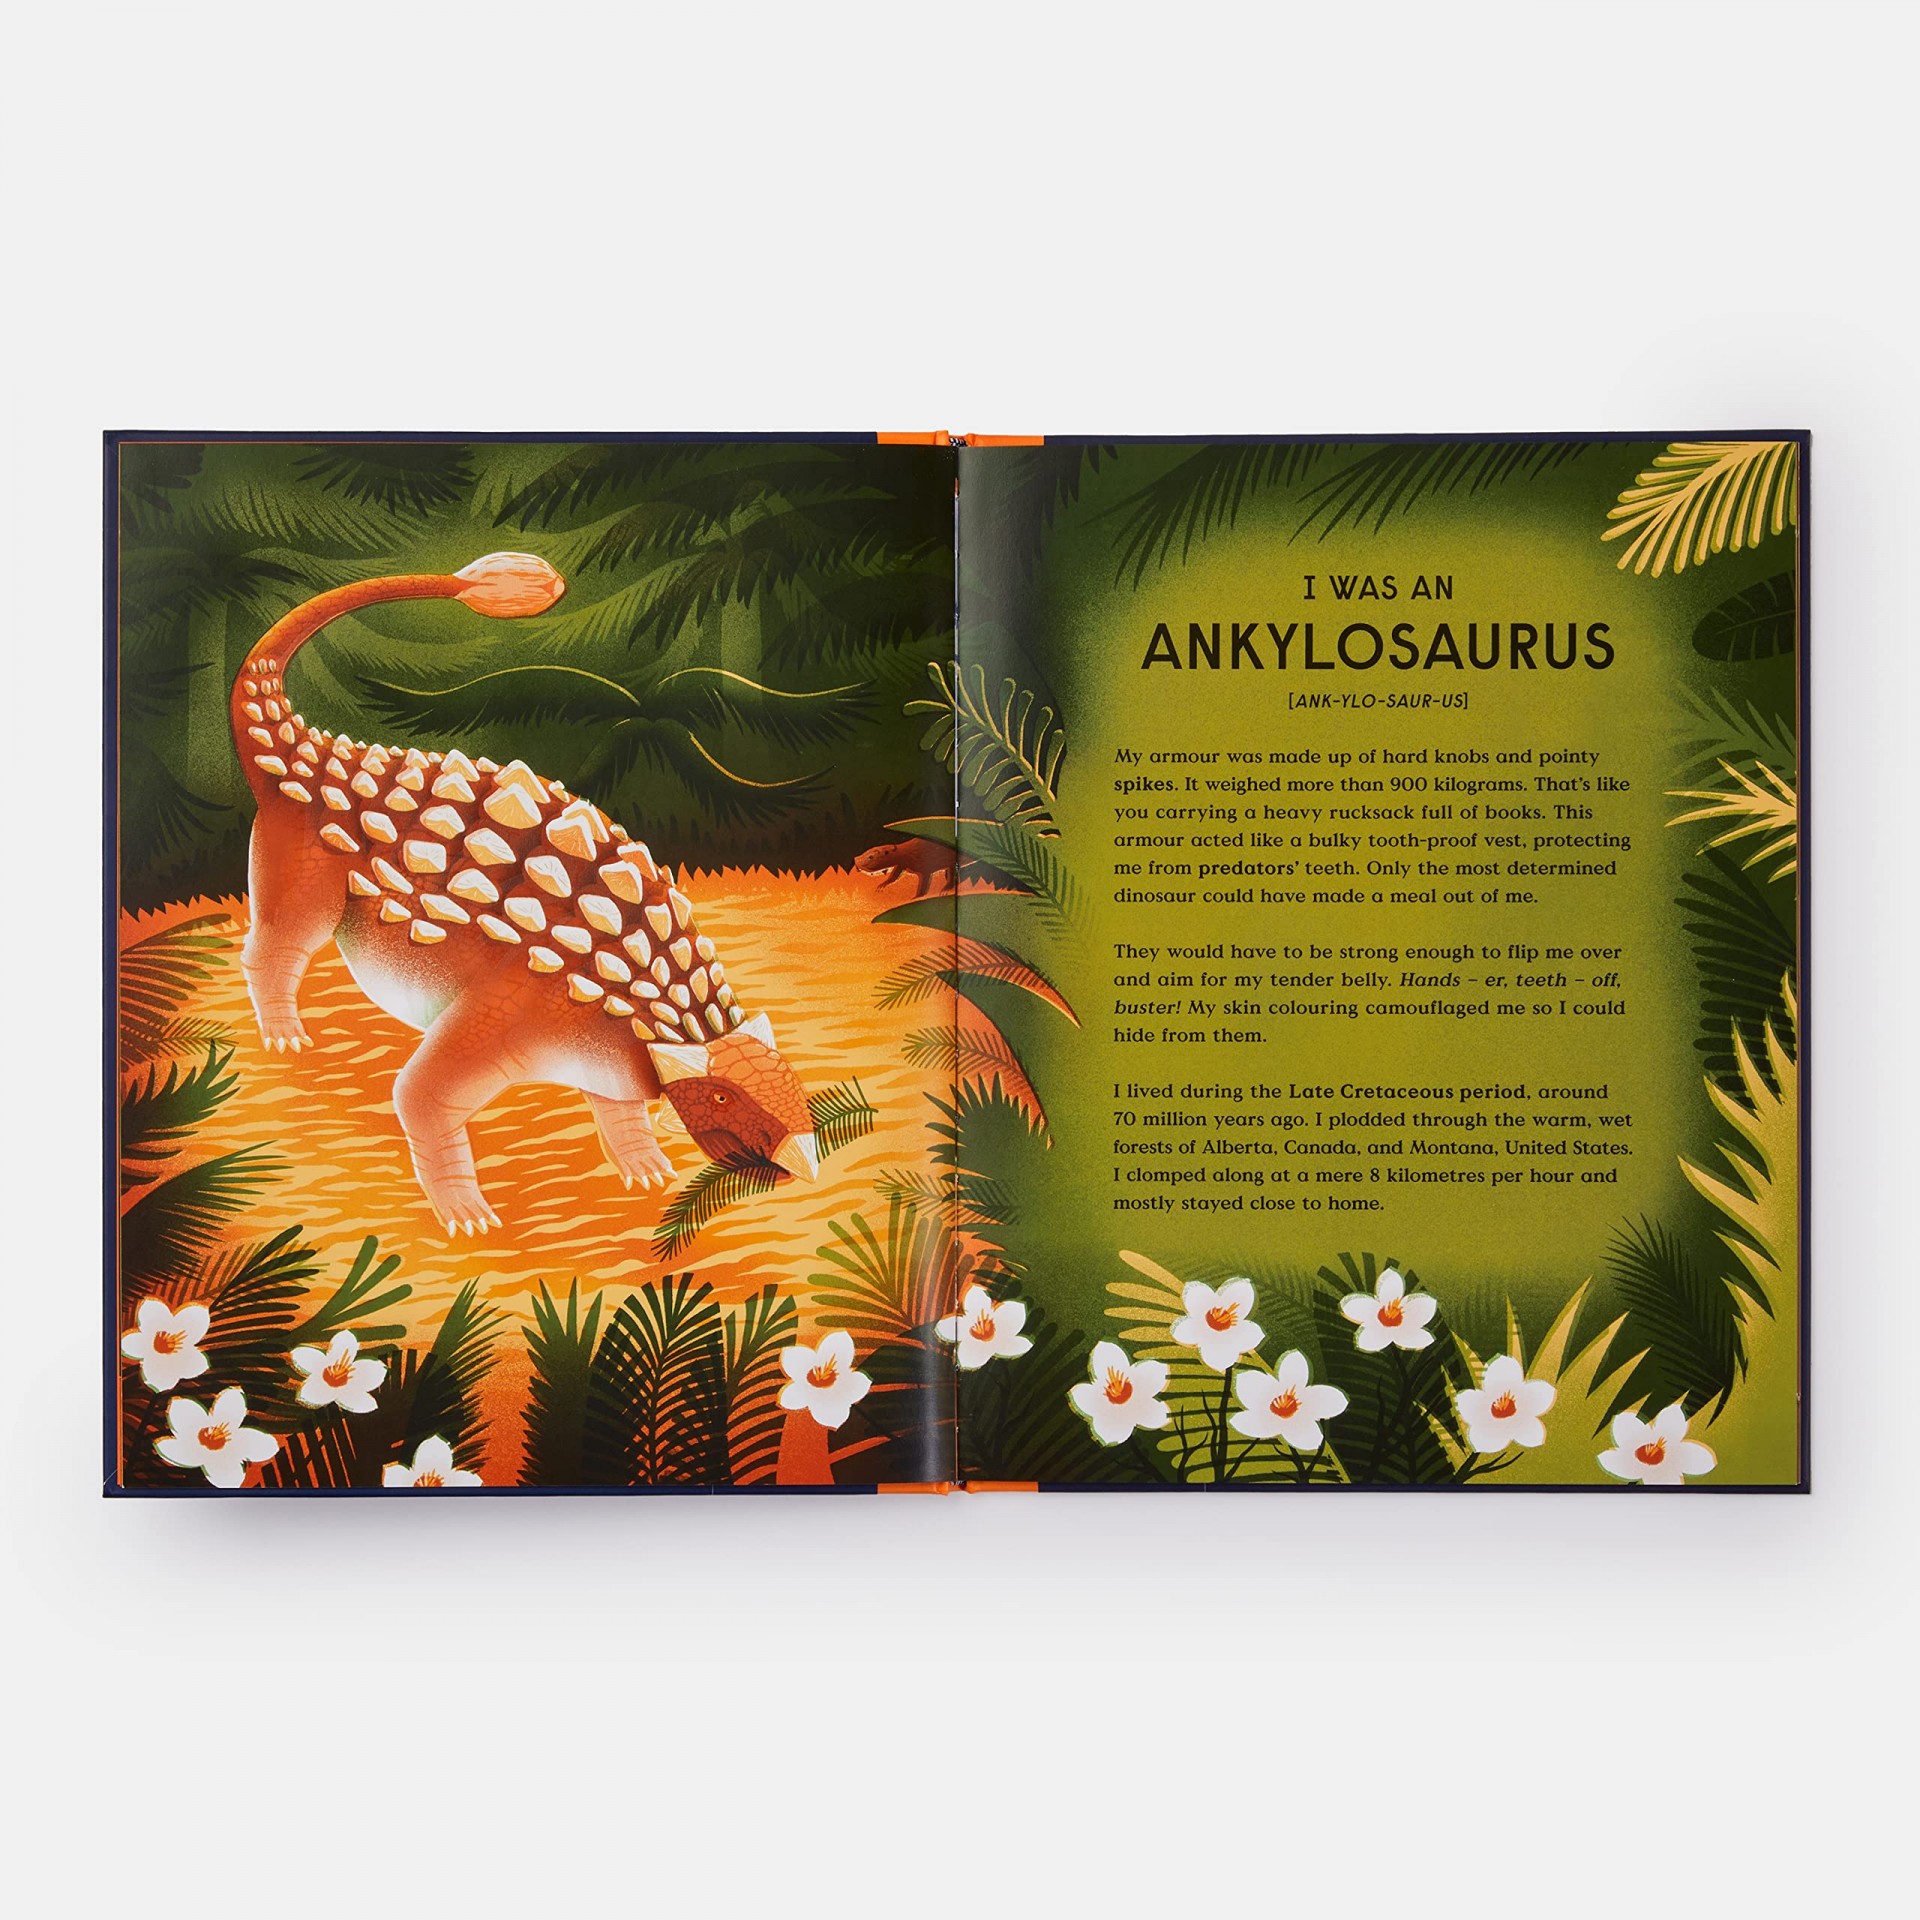 Book of Dinosaurs: 10 Record-Breaking Prehistoric Animals - Teşvikiye  Patika Kitabevi